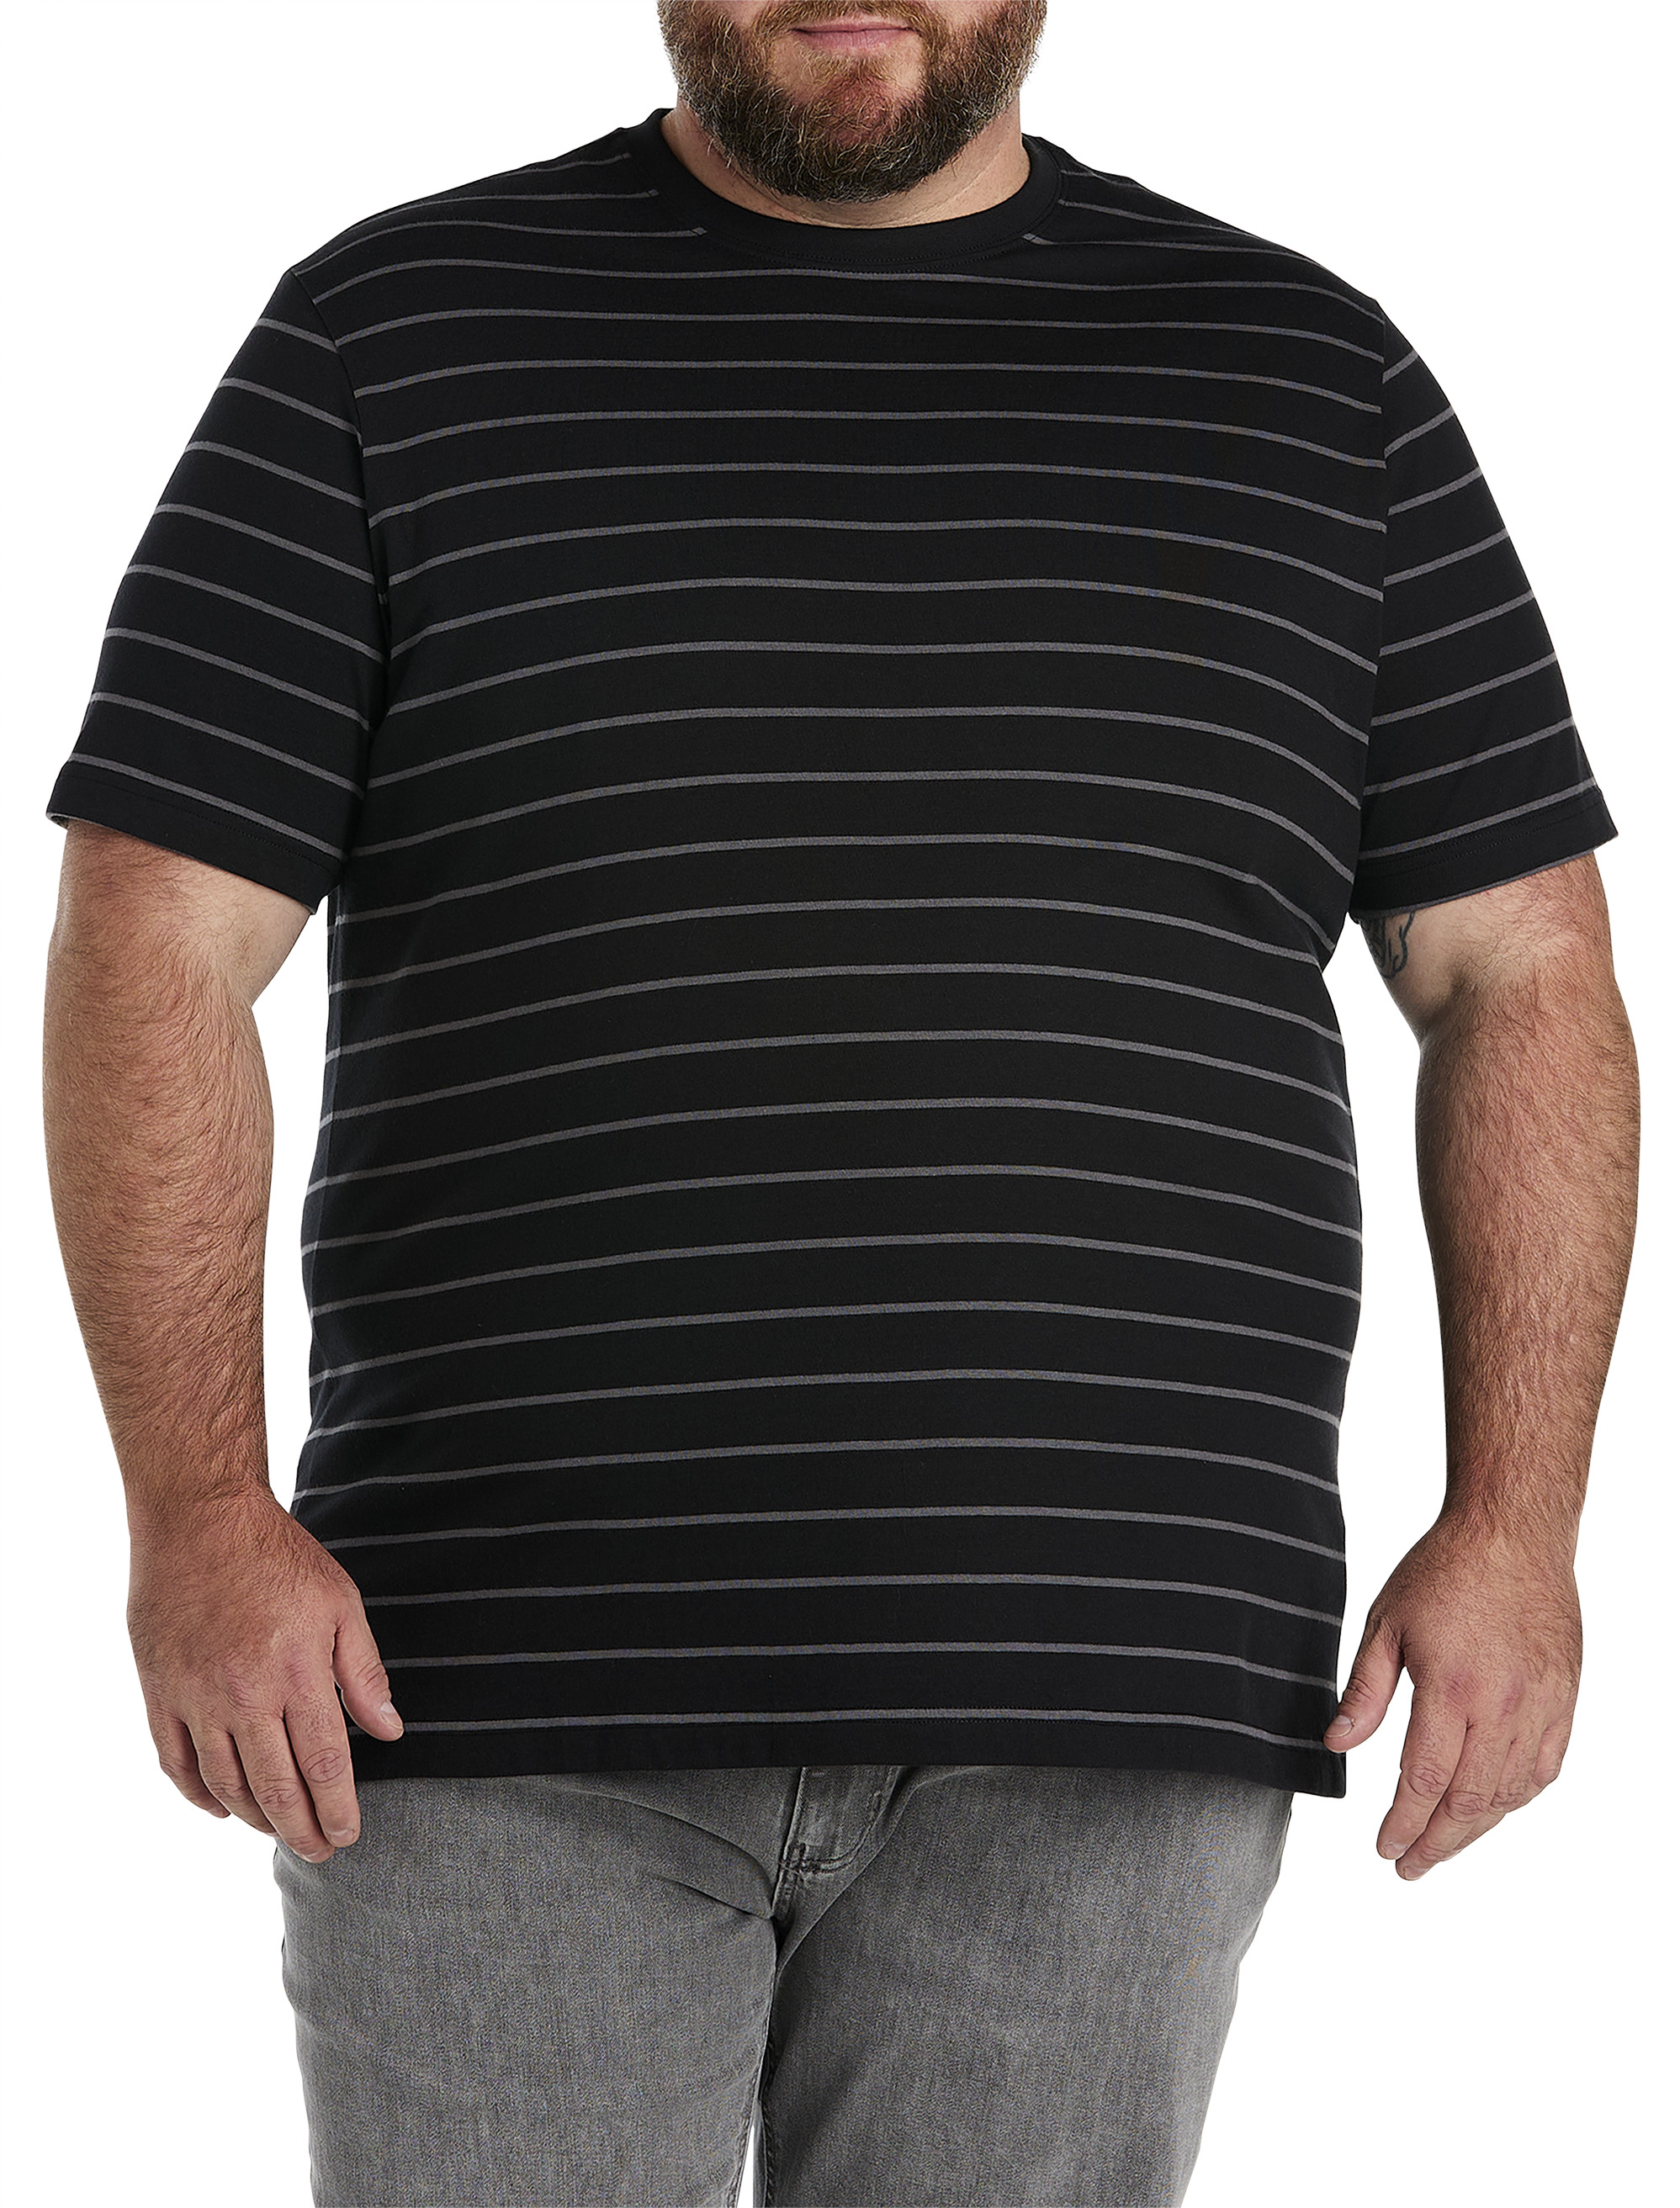 Moisture-Wicking Striped T-Shirt